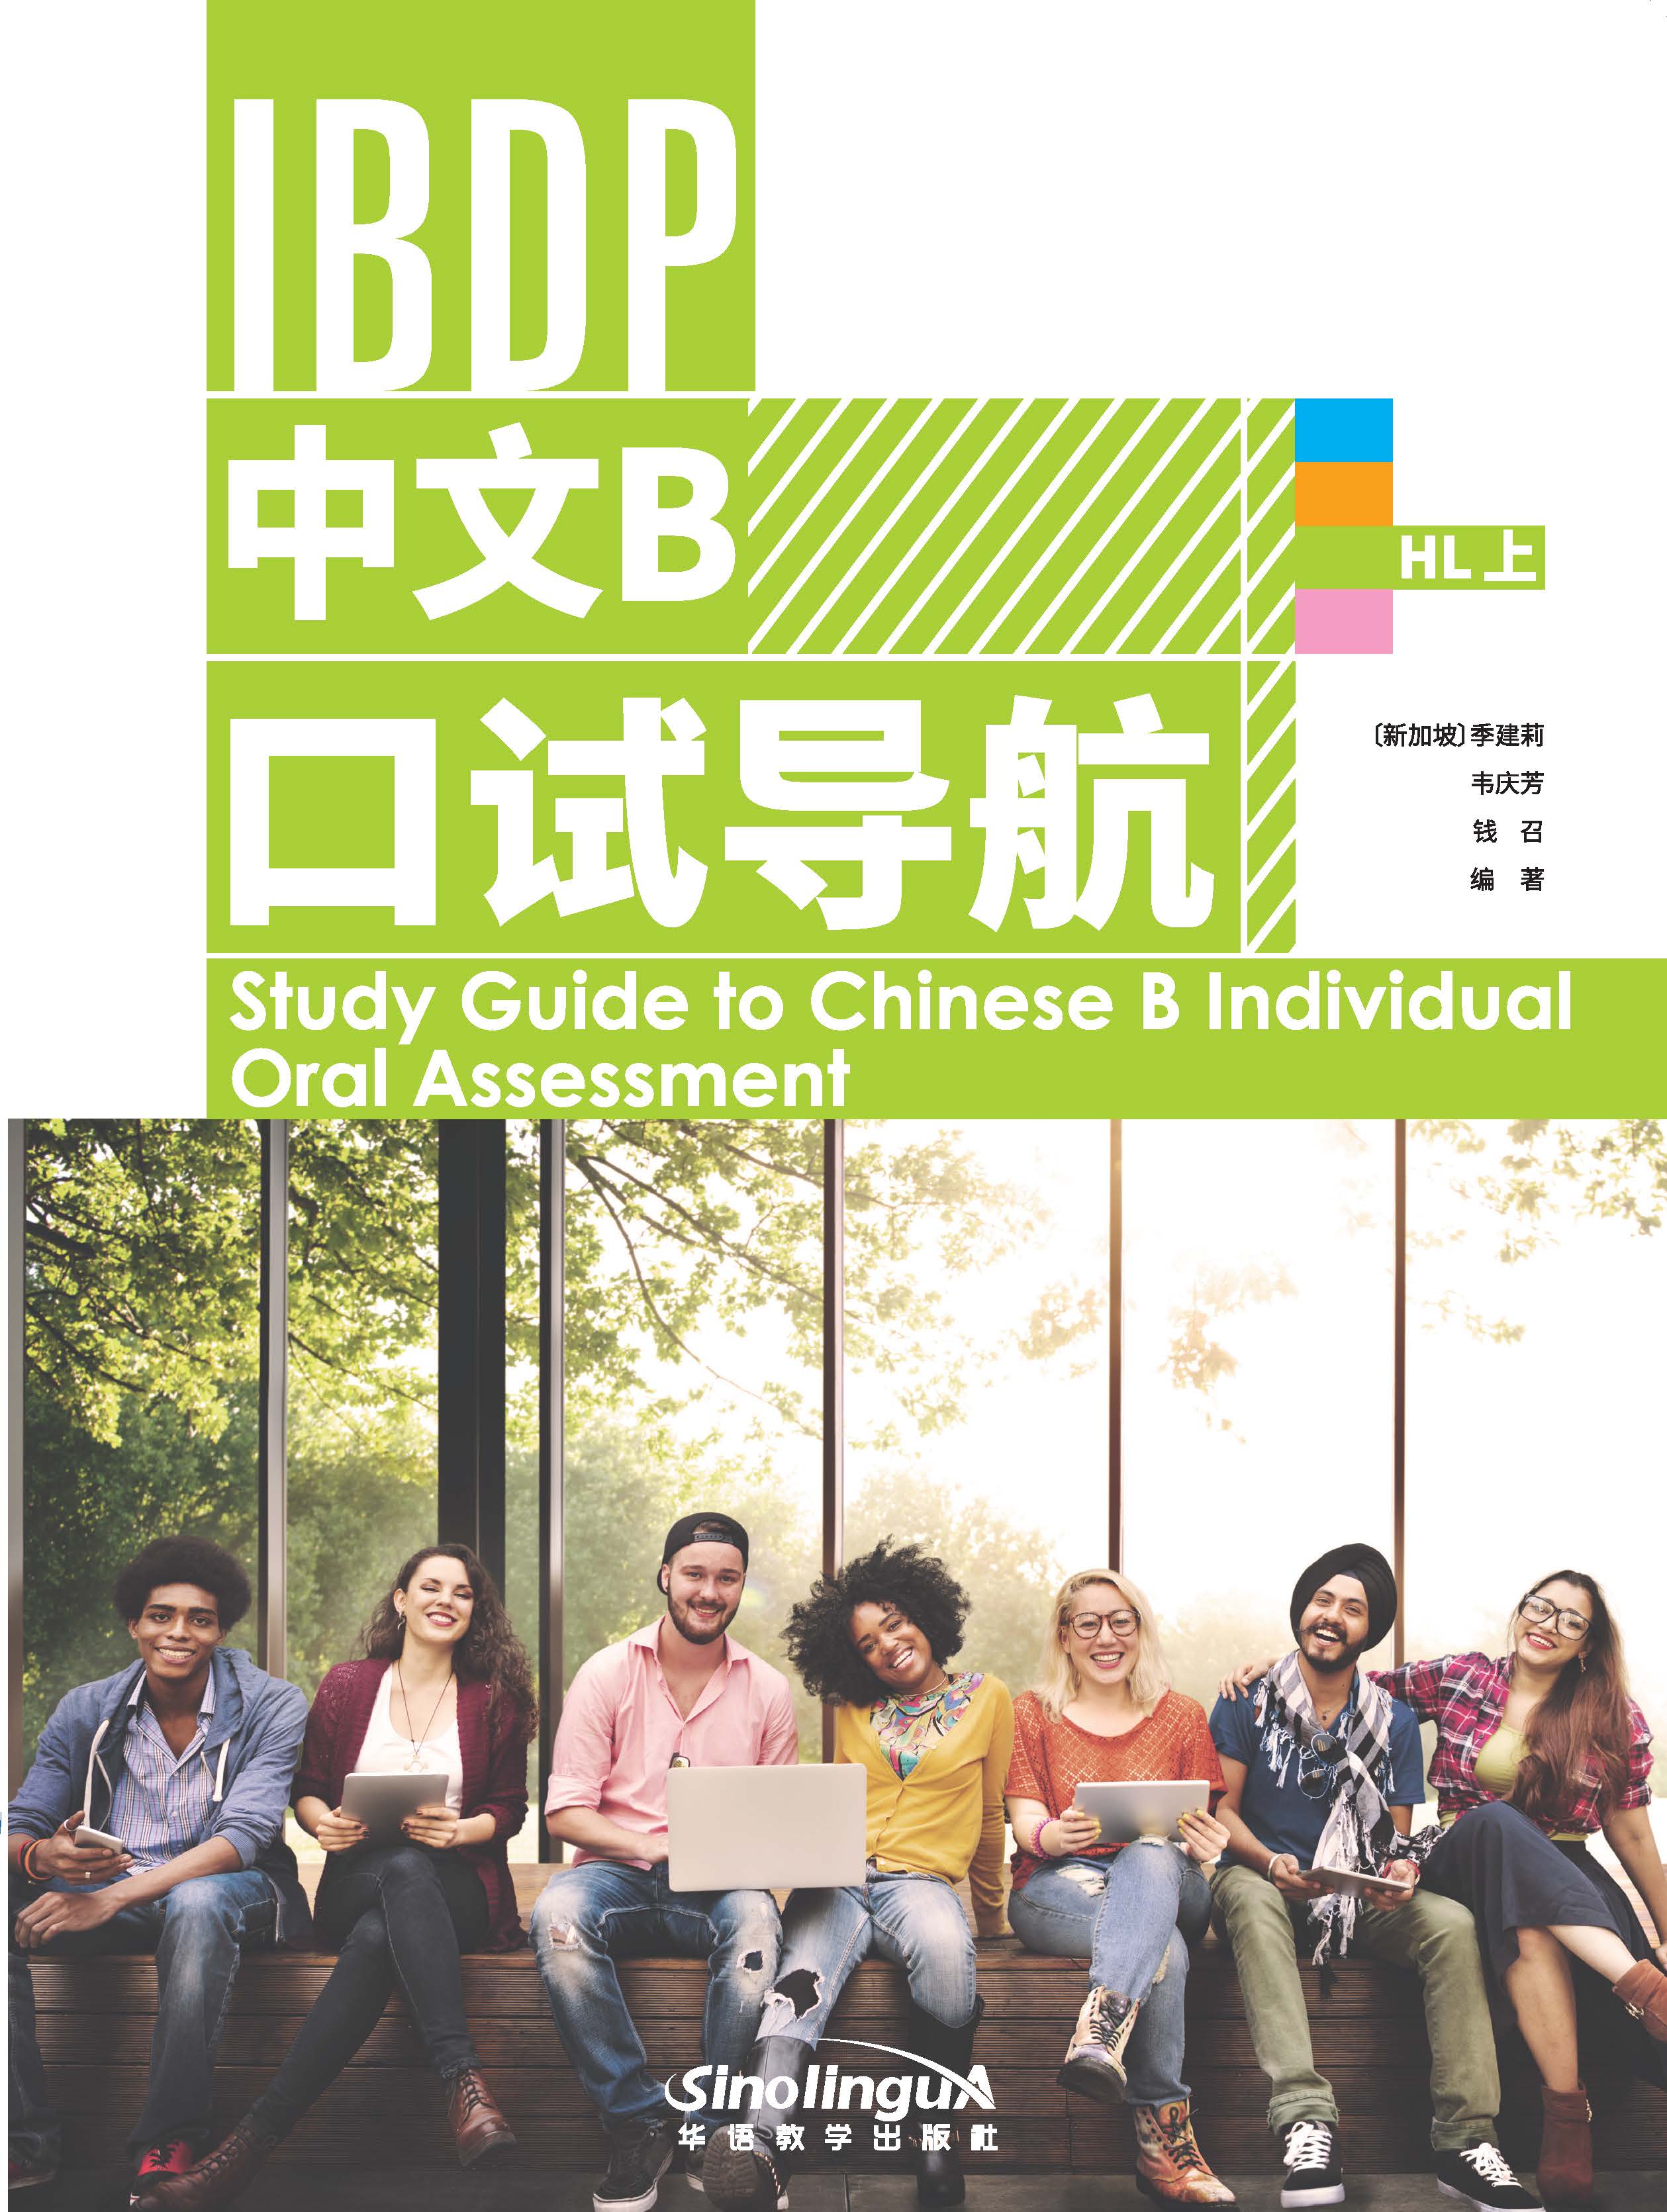 IBDP 中文B 口试导航 HL上   Study Guide to Chinese B Individual Oral Assessment HL 1